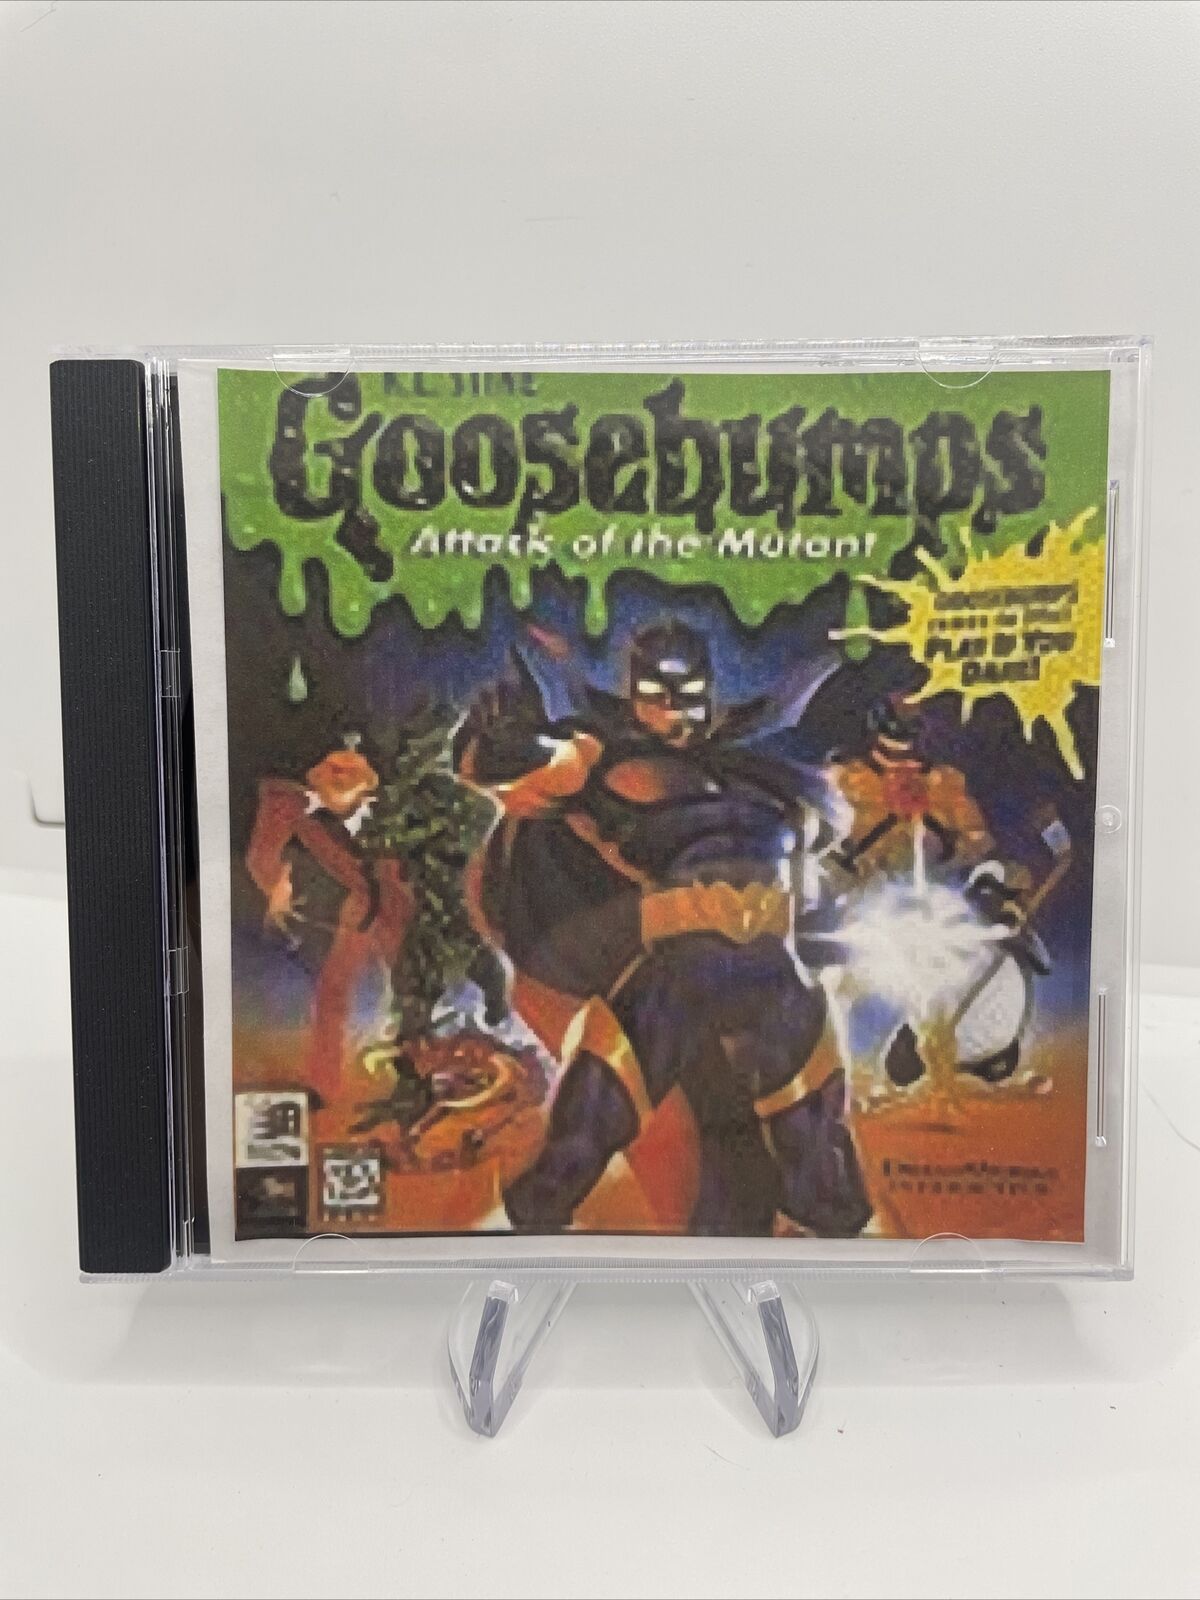 Goosebumps: Attack Of The Mutant (CD-ROM) R.L. Stine Game 